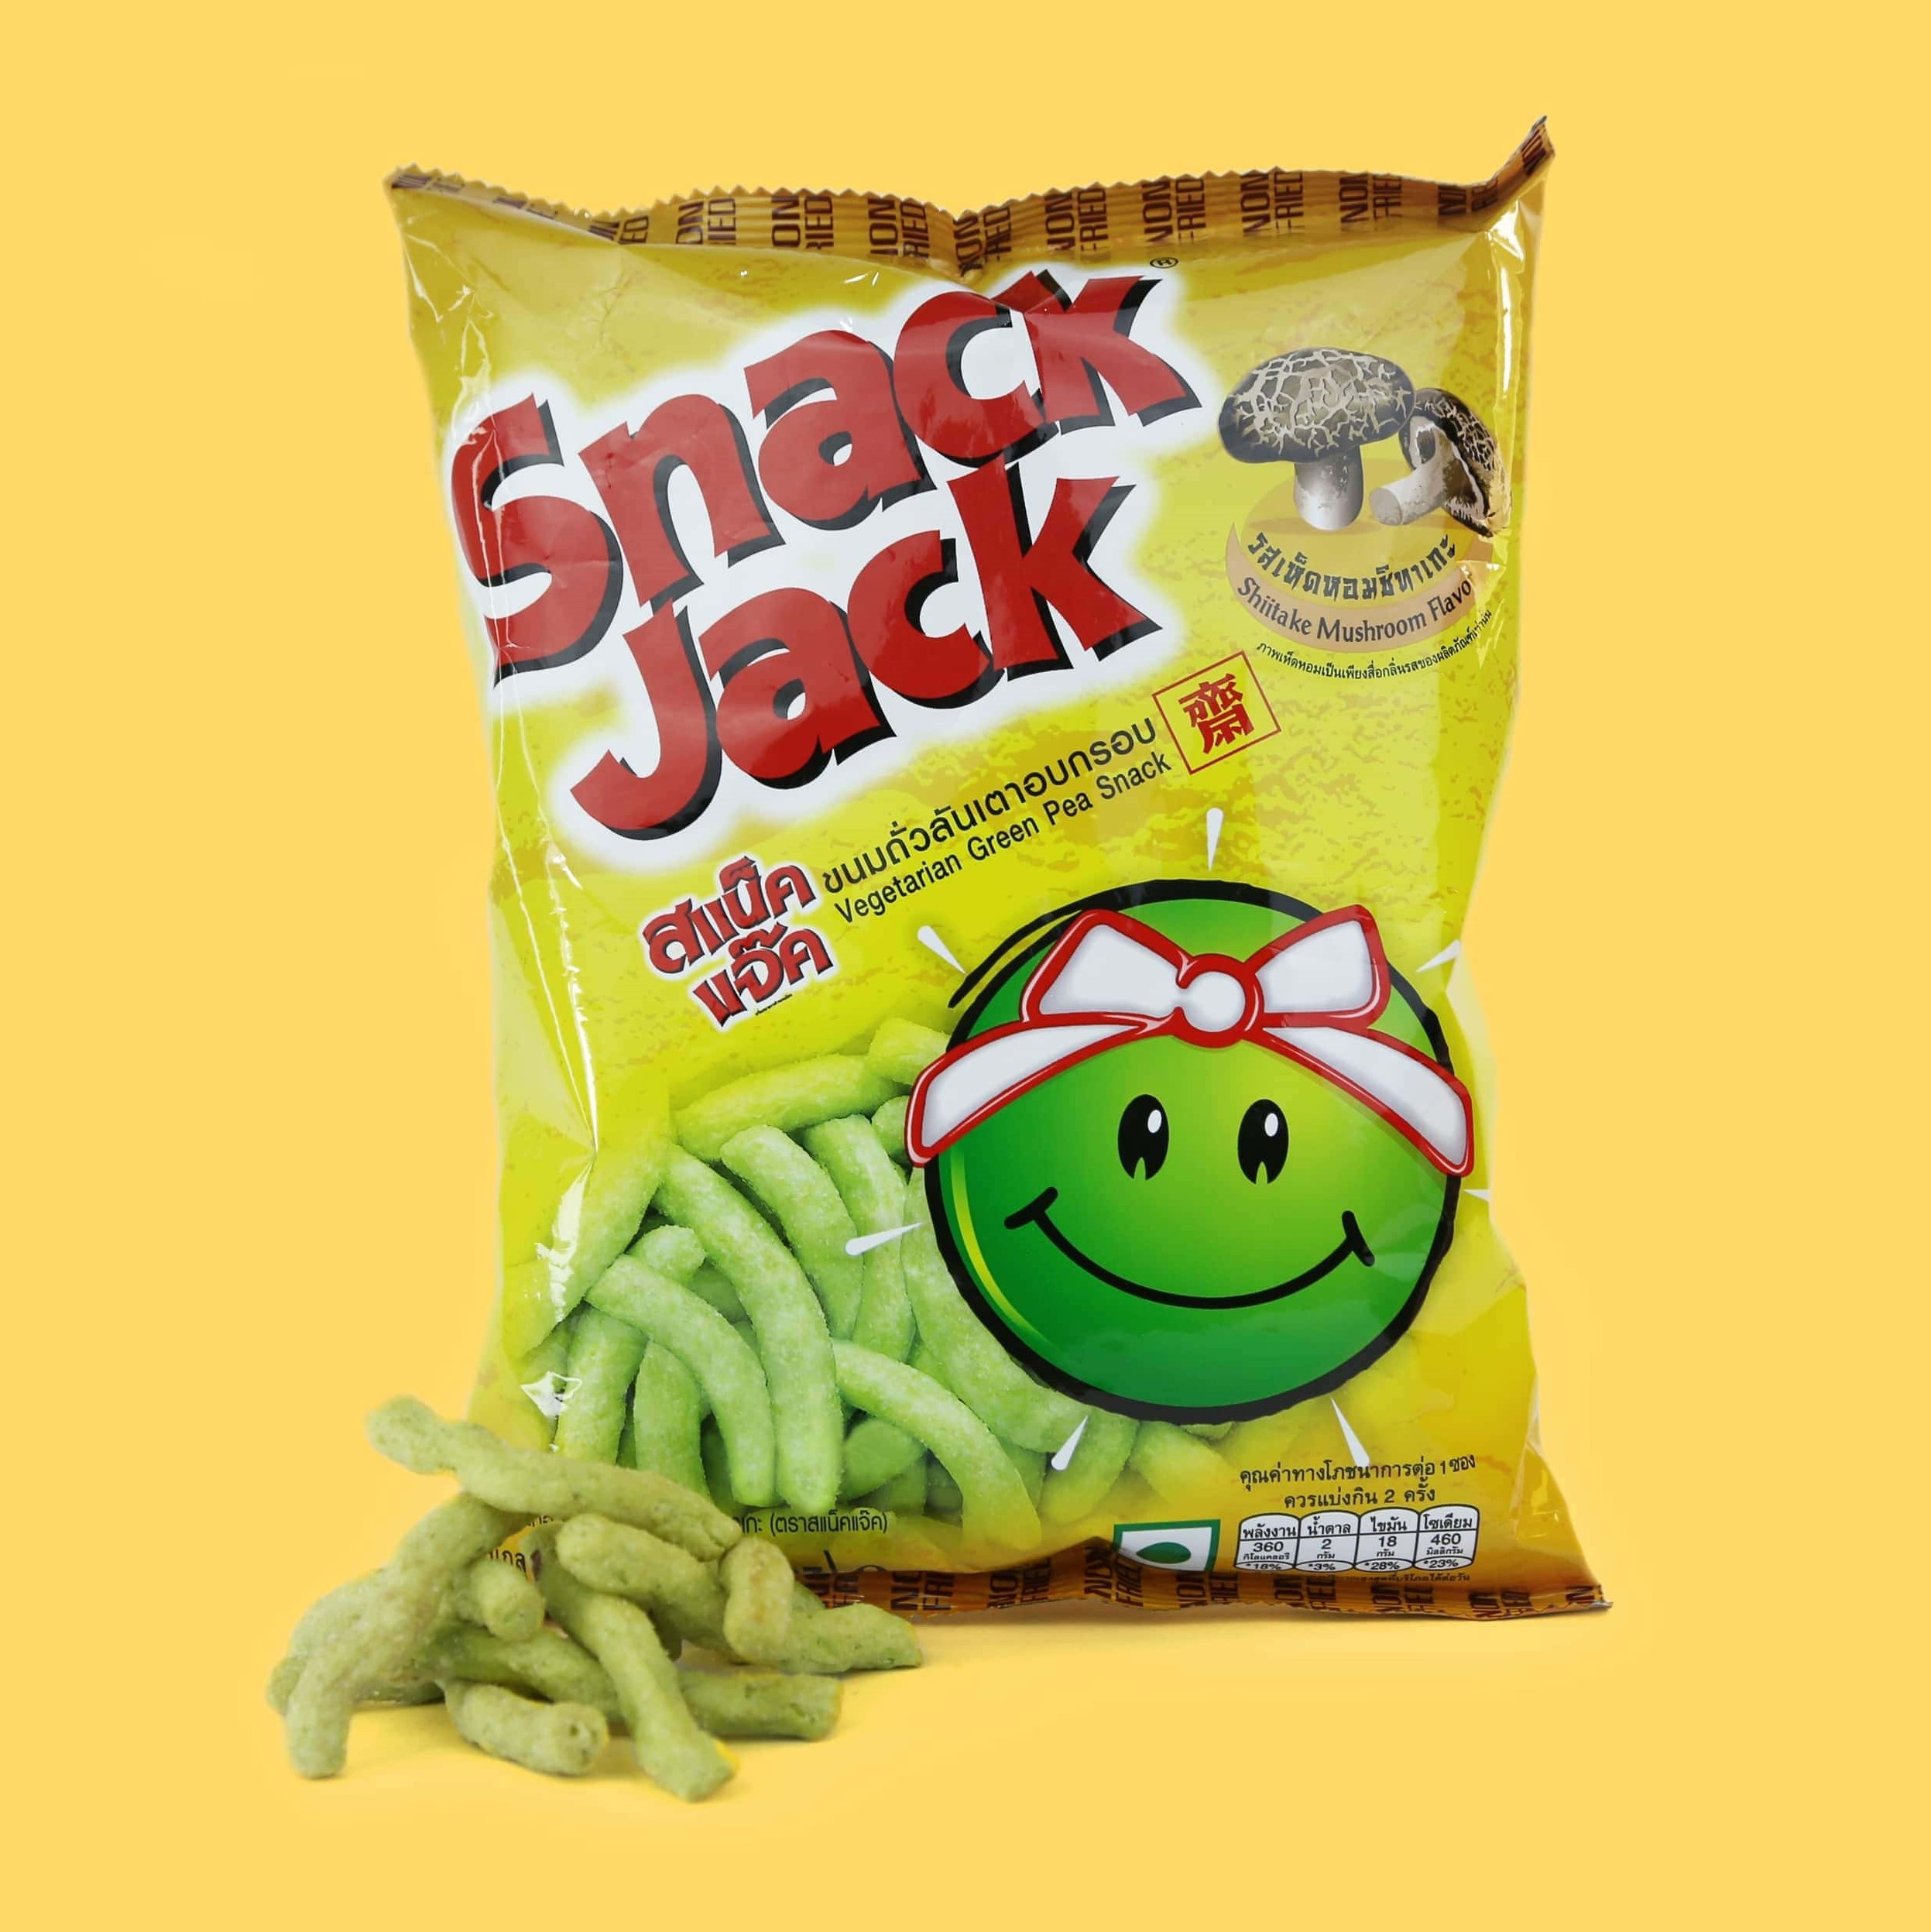 Snack Jack crispy vegetarian green pea snack, shiitake mushroom flavor. Classic Thai snacks during vegetarian jay restival